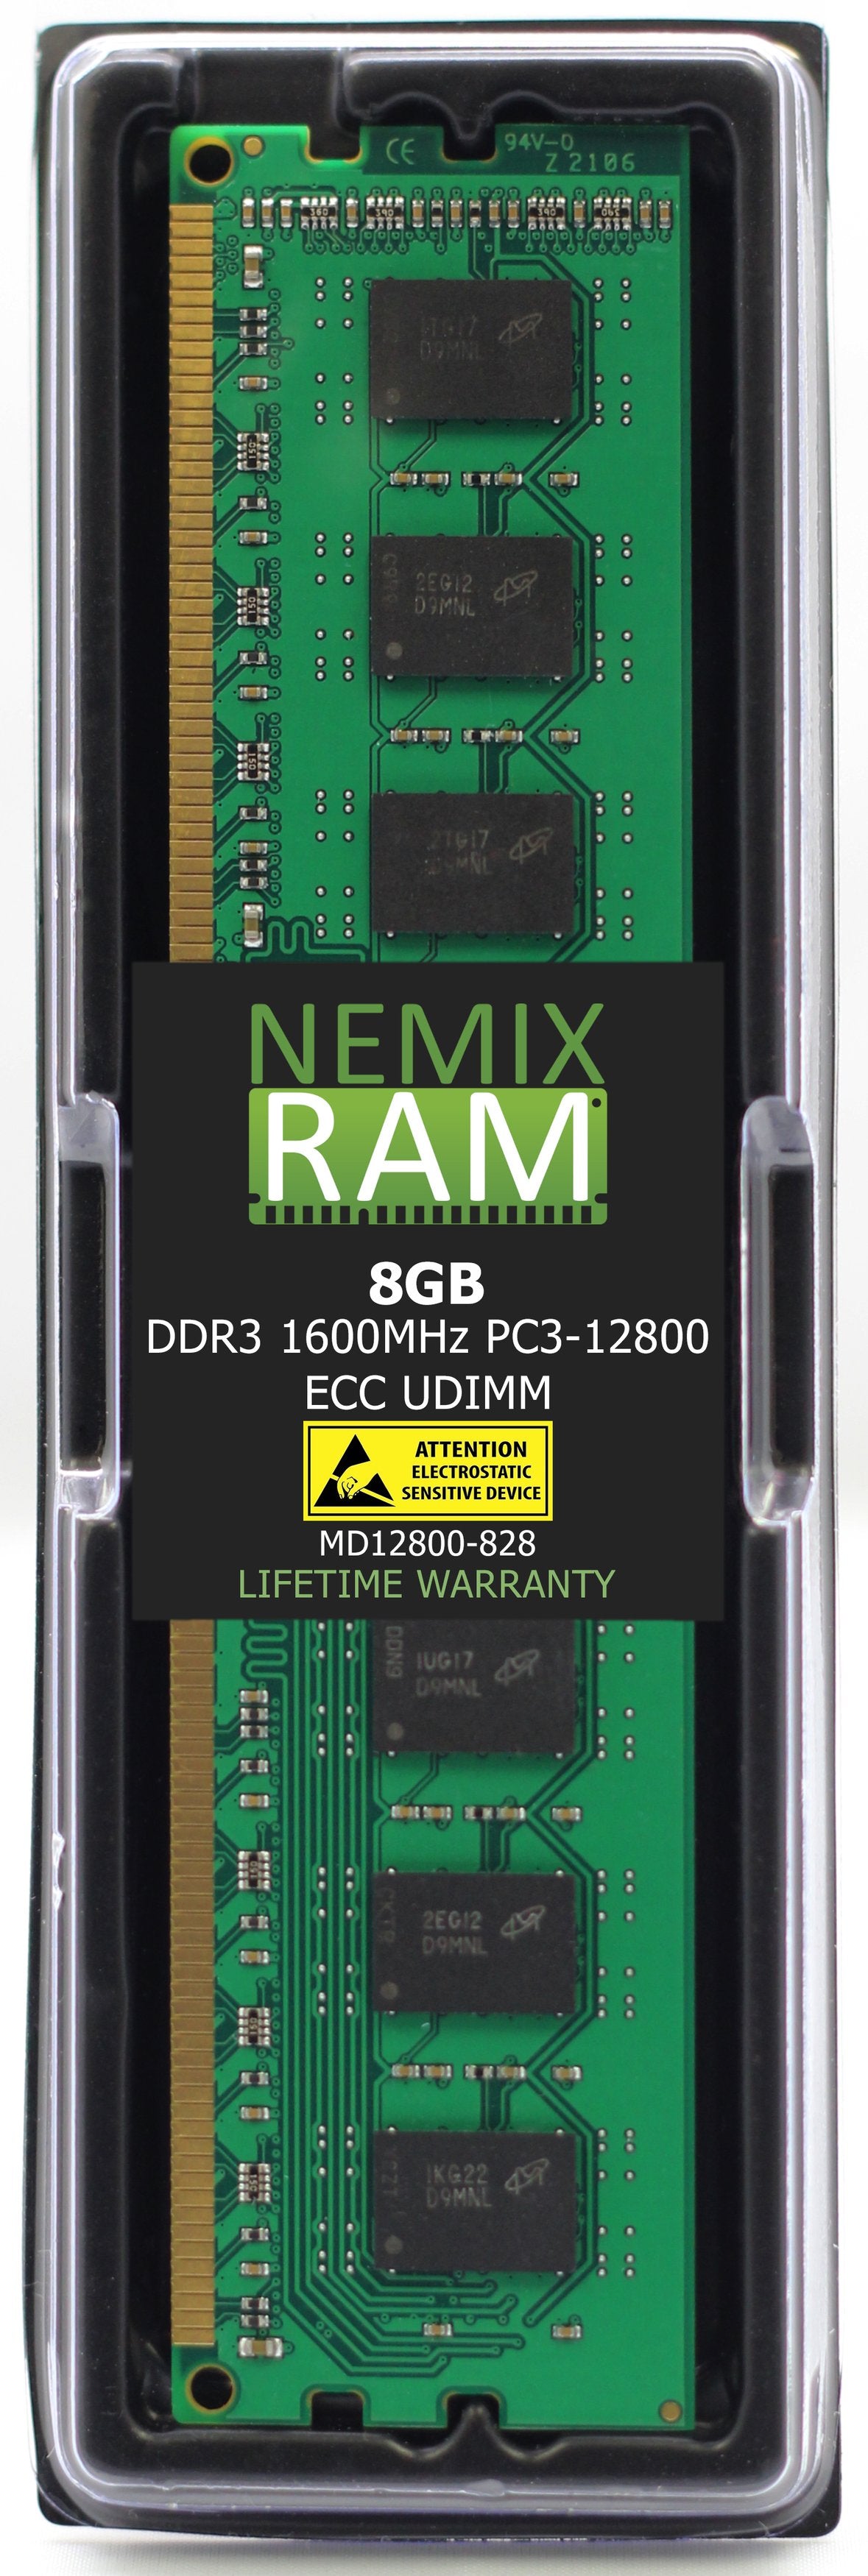 NEMIX RAM Memory Upgrade equivalent to ASUSTOR AS7R-RAM8G UDIMM Memory Module